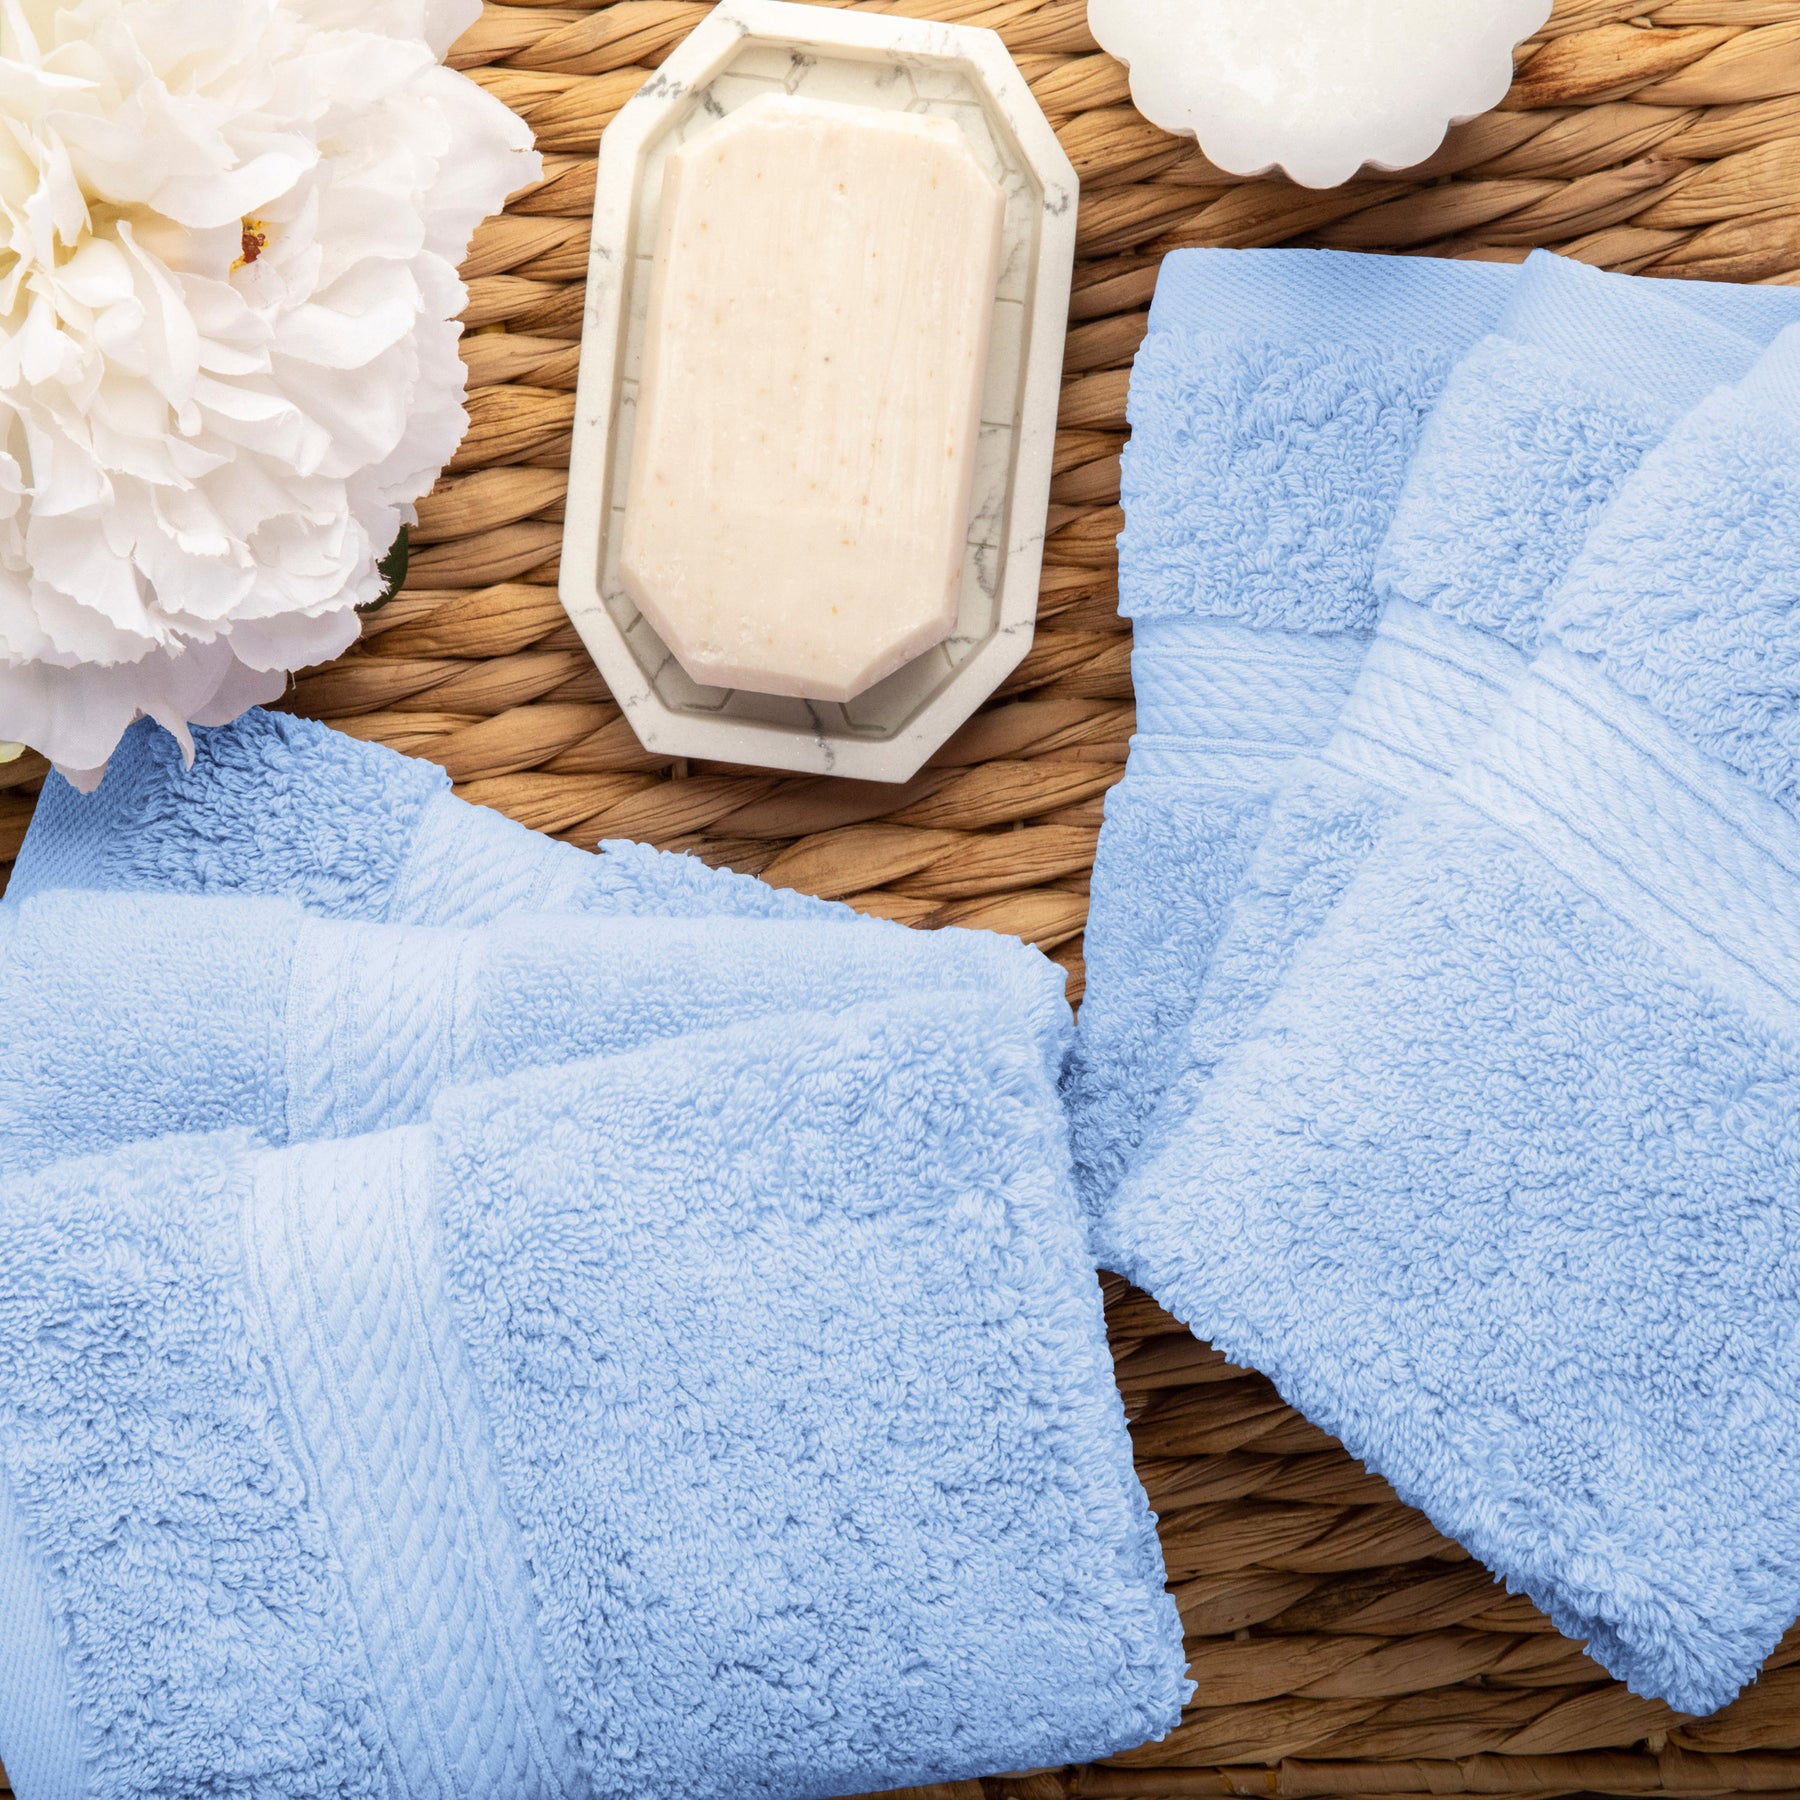 Egyptian Cotton Heavyweight 6 Piece Face Towel/ Washcloth Set - Light Blue